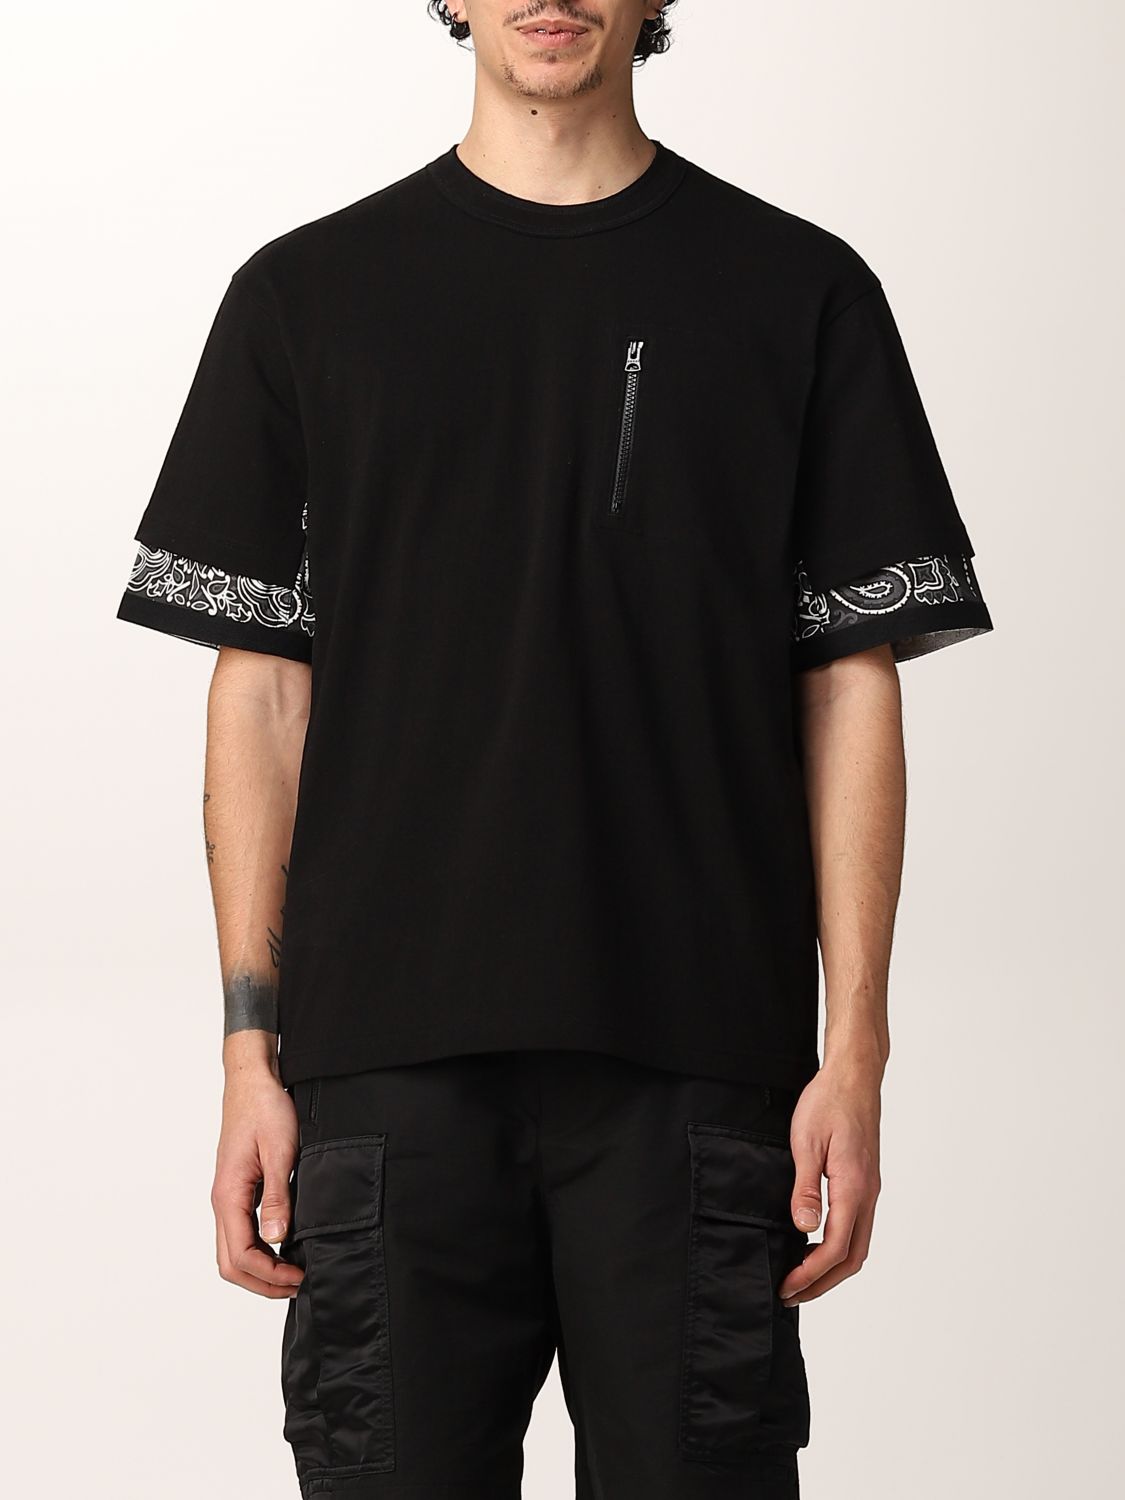 SACAI: t-shirt for man - Black | Sacai t-shirt 2202697M online at ...